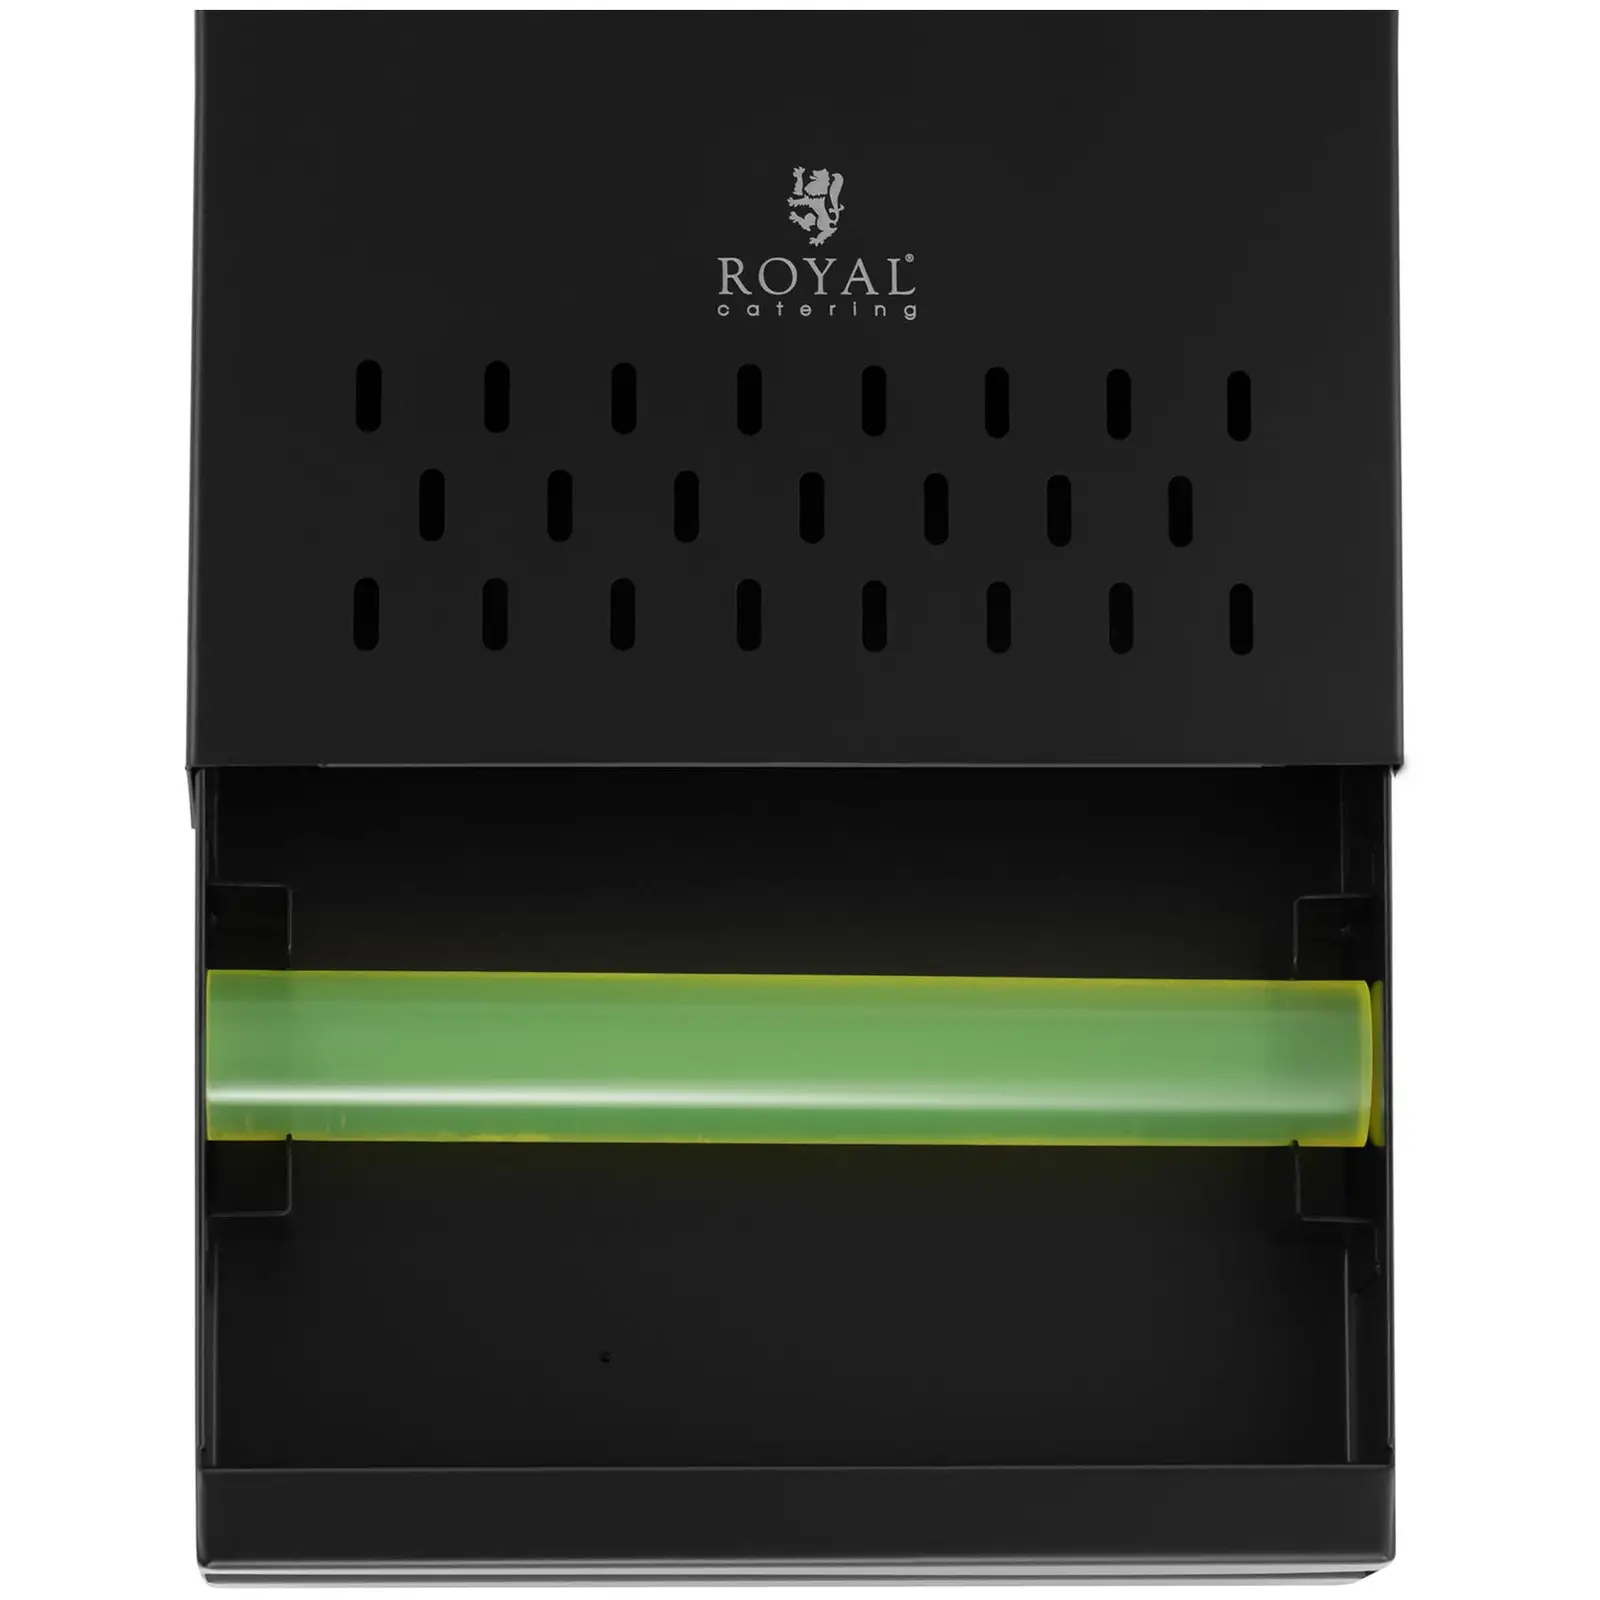 Knock box - ruostumaton teräs - 5,7 l - Royal Catering